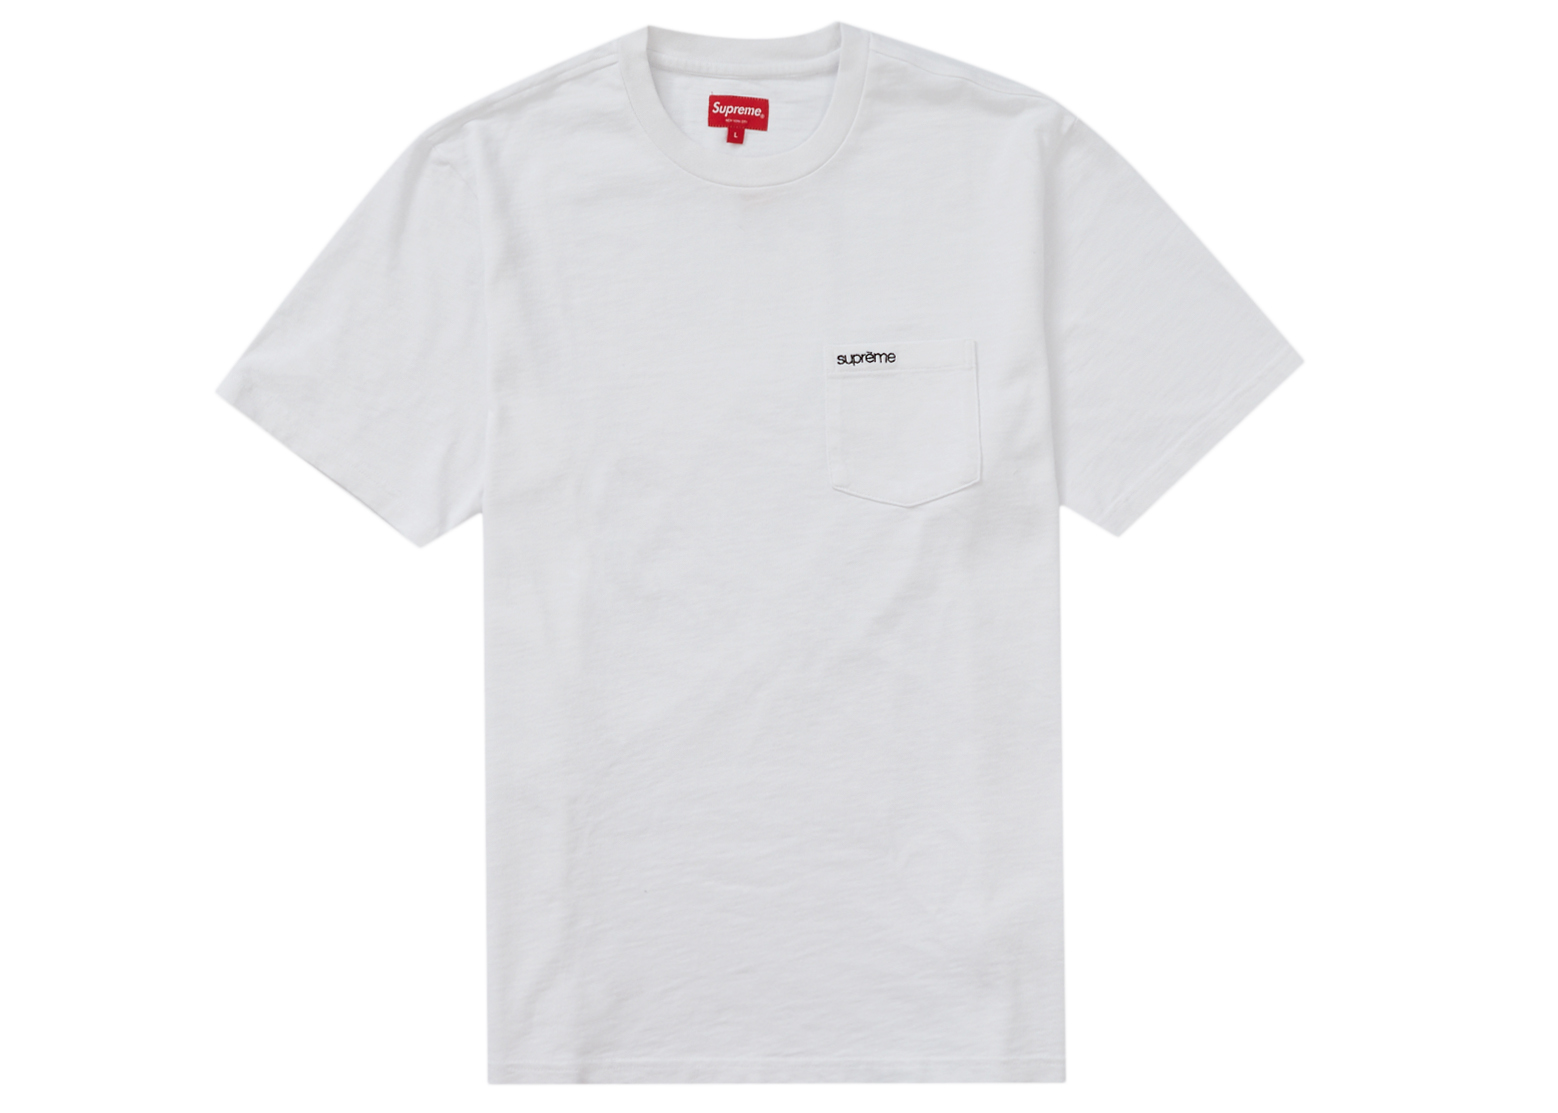 Streetwear - Release Date Supreme T-Shirts - StockX